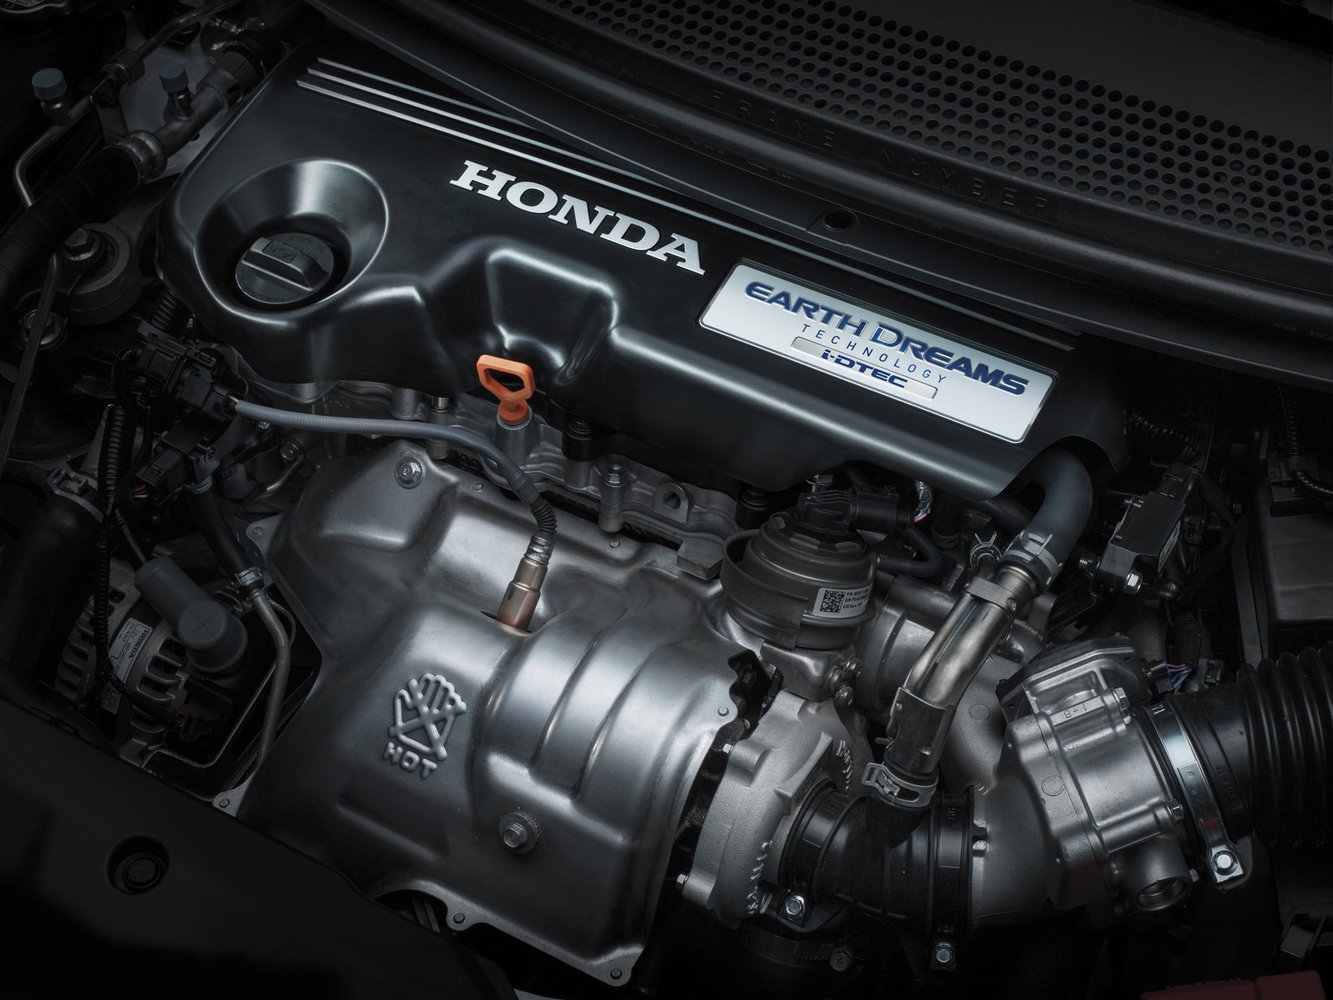 хэтчбек 3 дв. Honda CR-Z 2010 - 2016г выпуска модификация 1.5 CVT (112 л.с.)